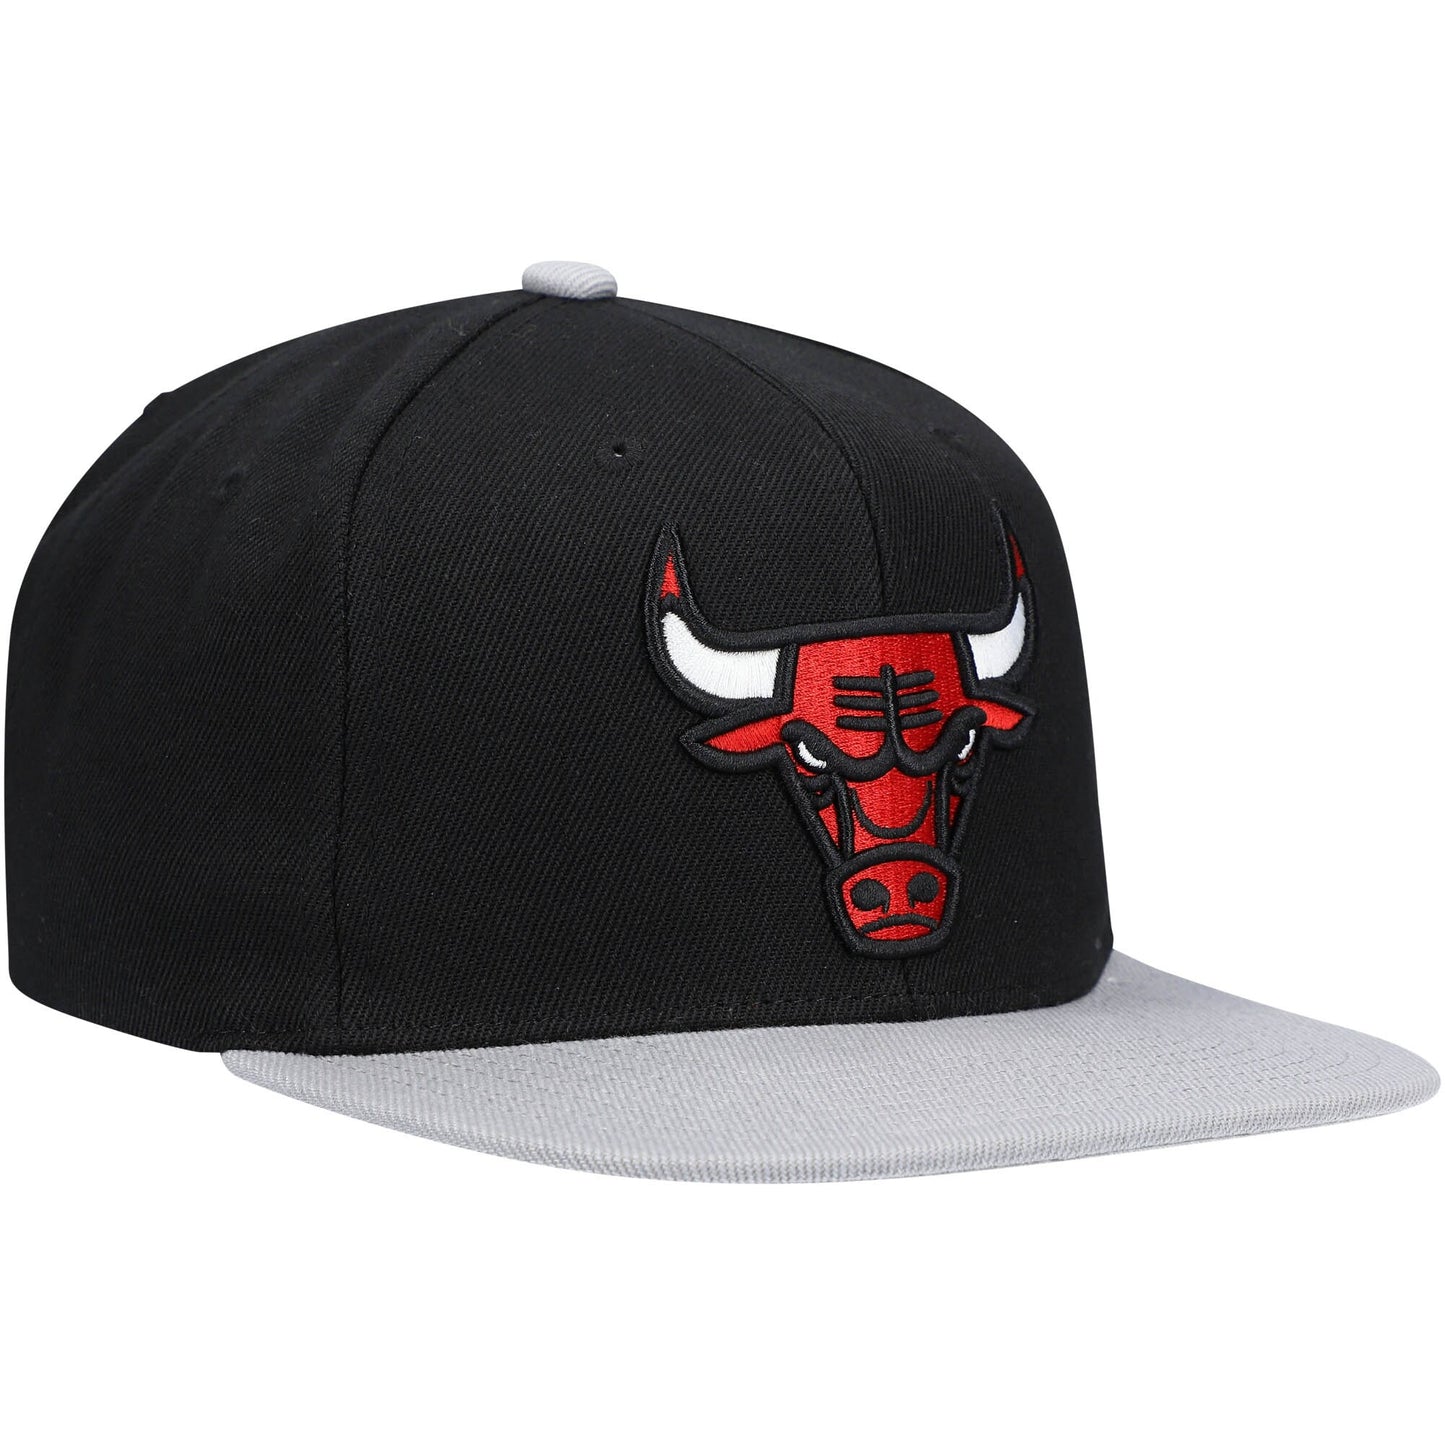 Men's Mitchell & Ness Chicago Bulls Core Black/ Gray Adjustable Snapback Hat